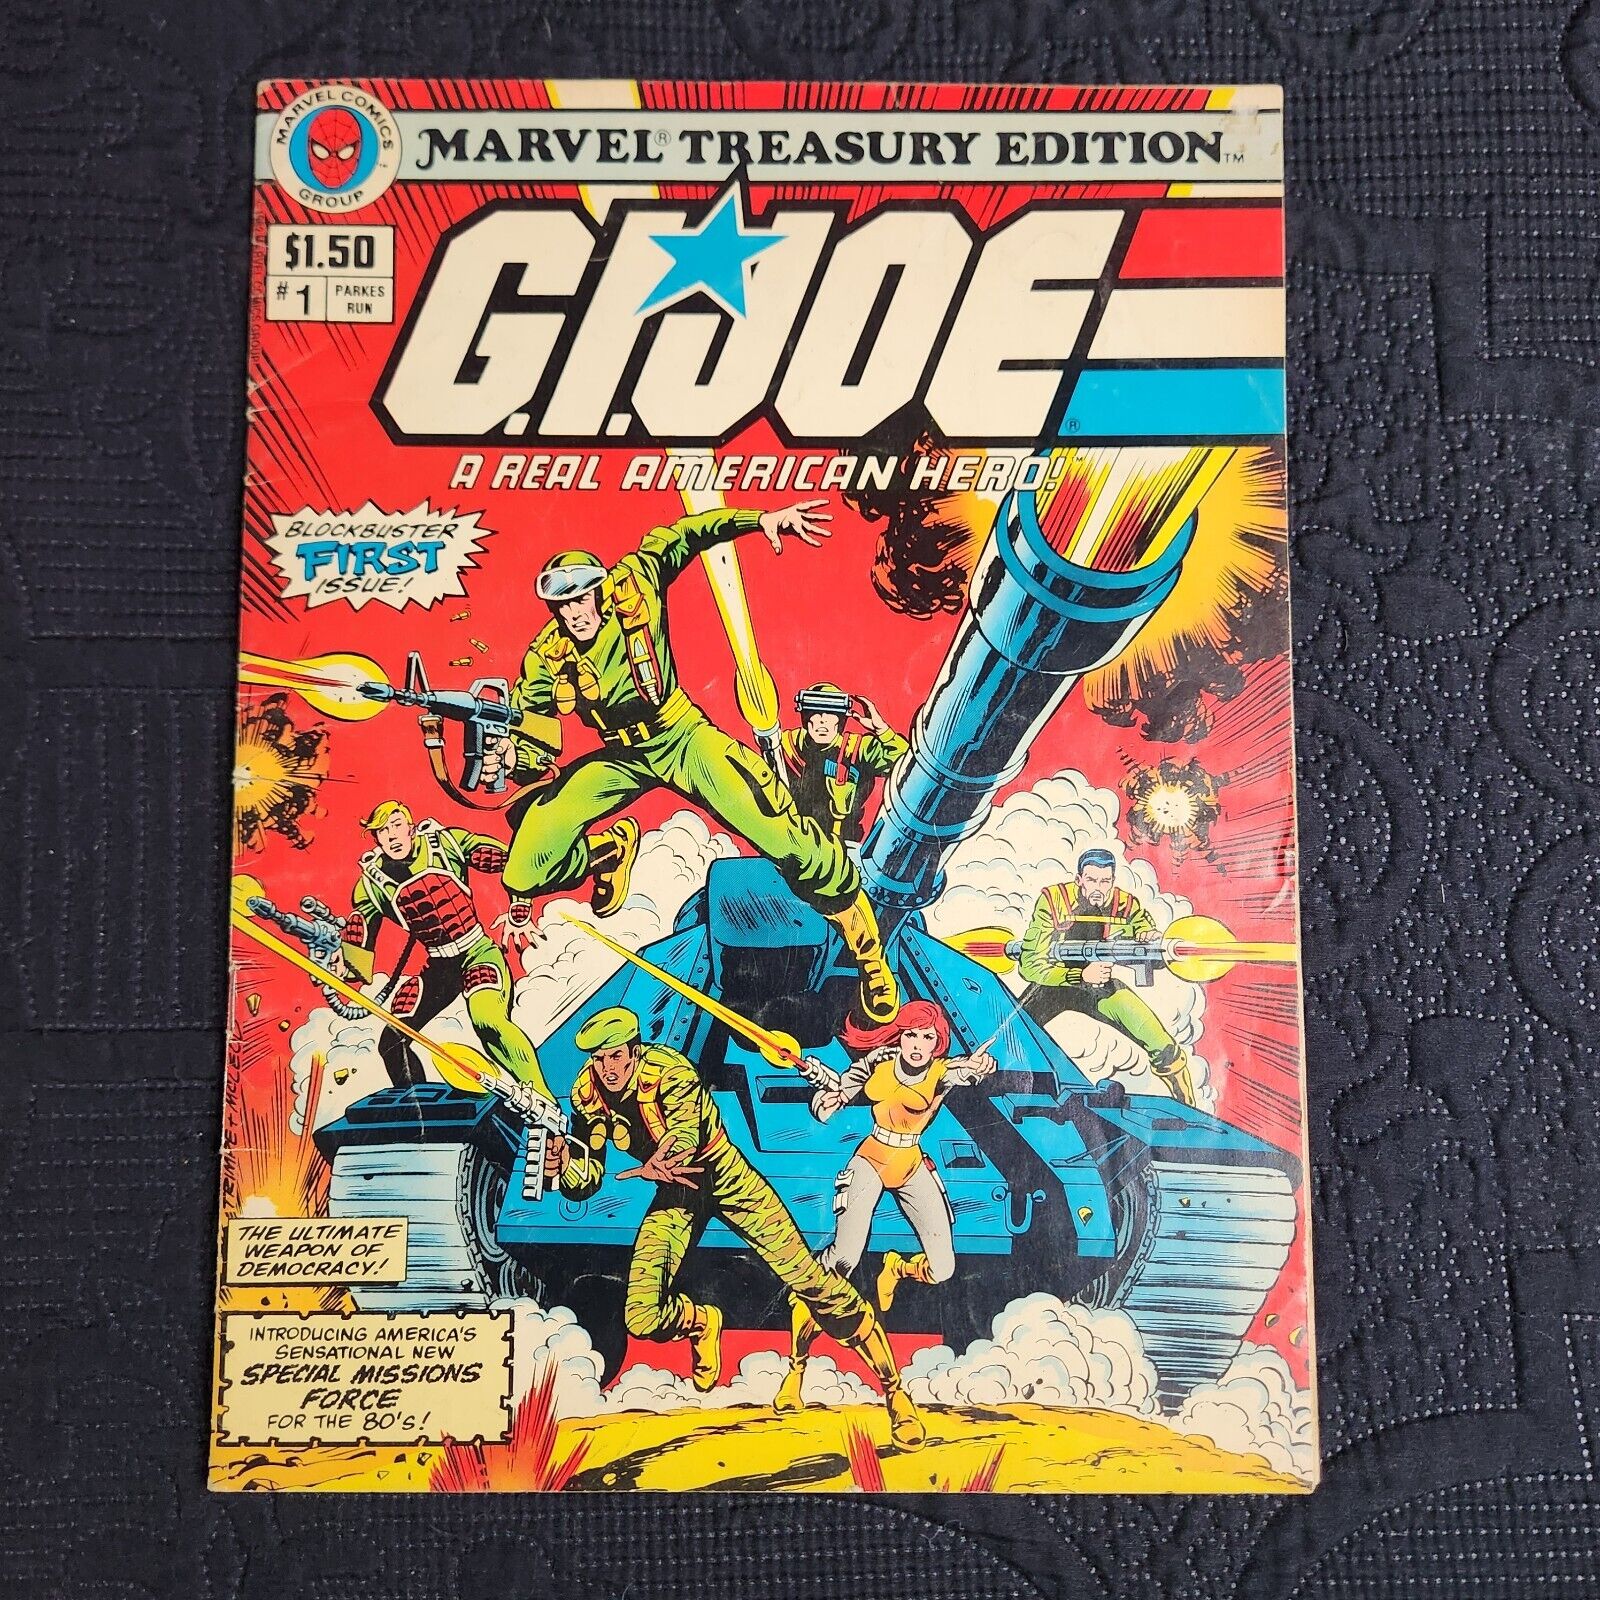 G.I. JOE # 1 Marvel Treasury Edition - First Issue ARAH. 